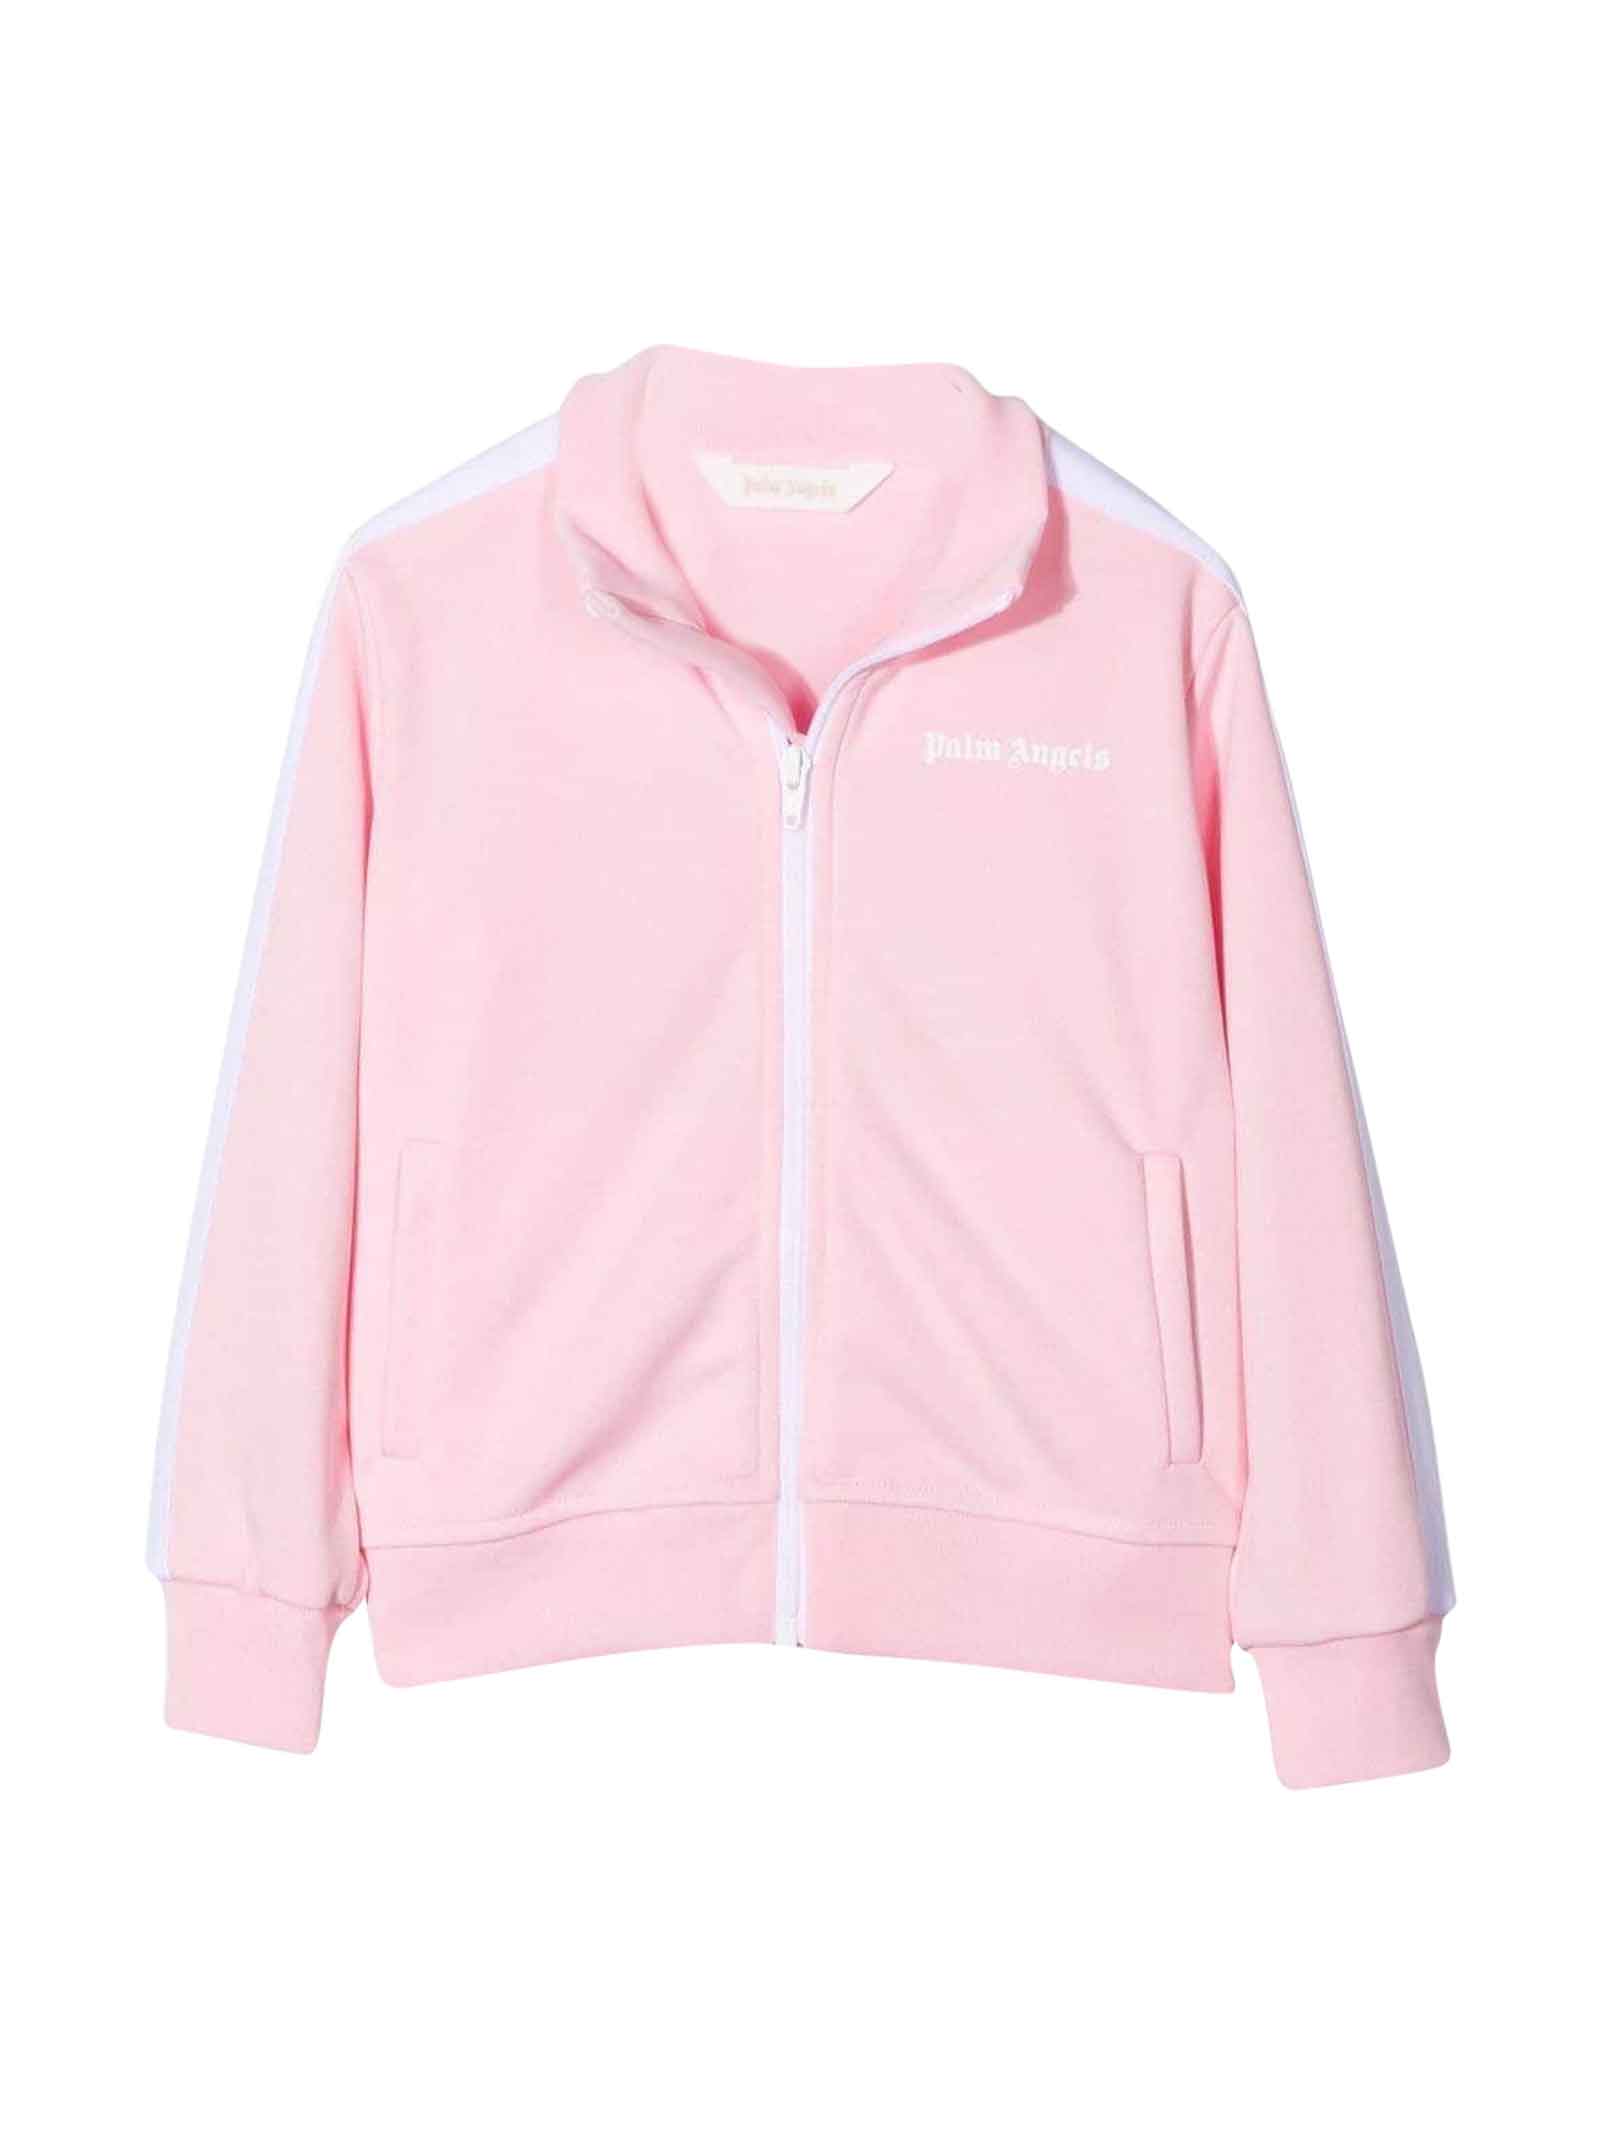 Palm Angels Pink Sweatshirt With Hood